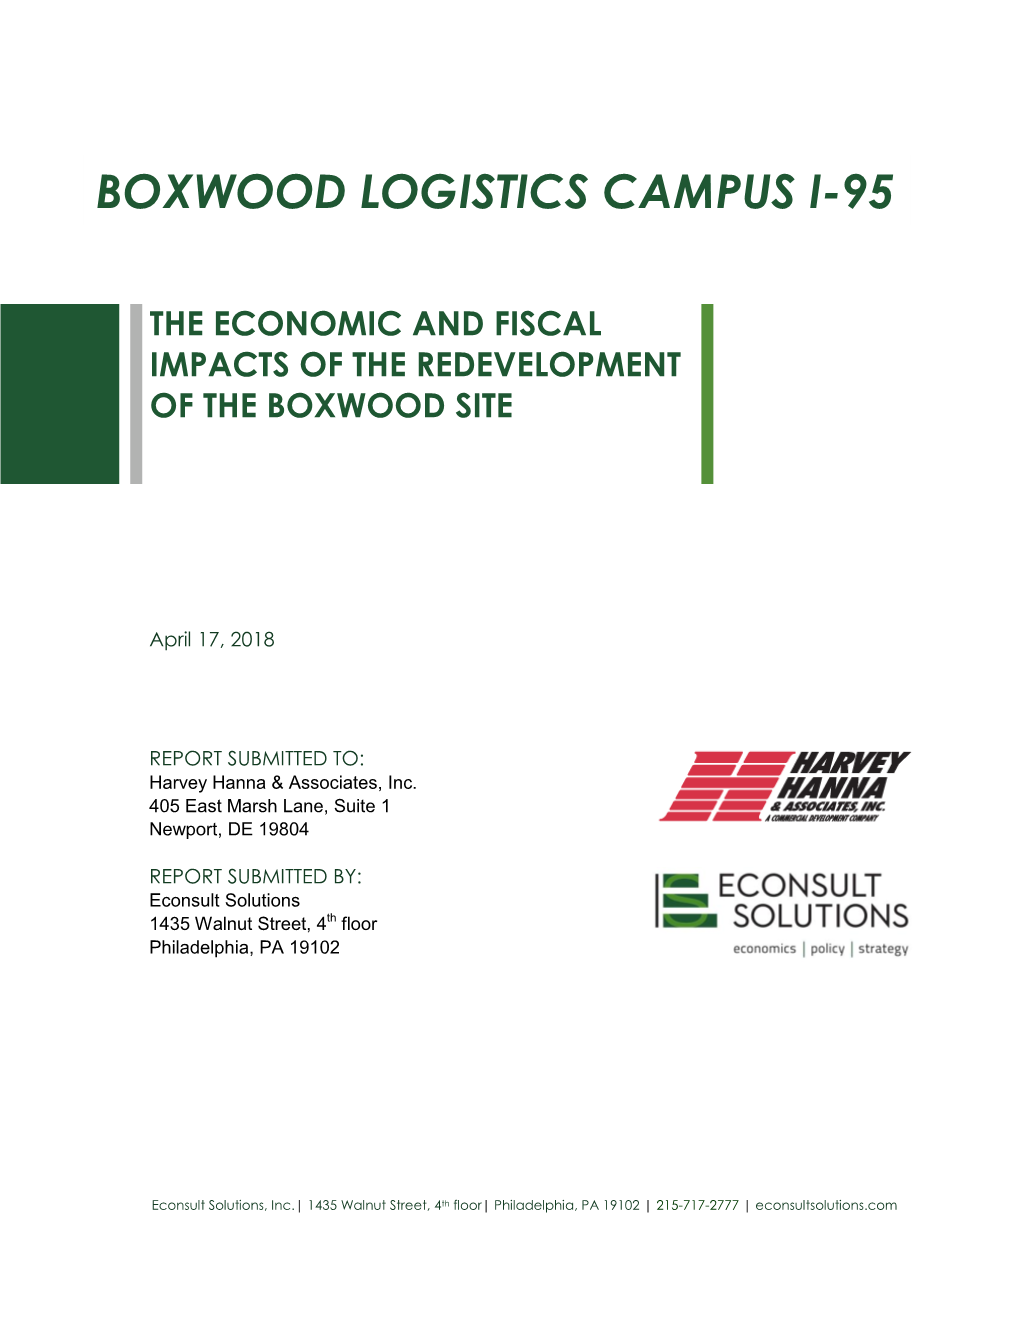 Boxwood Logistics Campus I-95